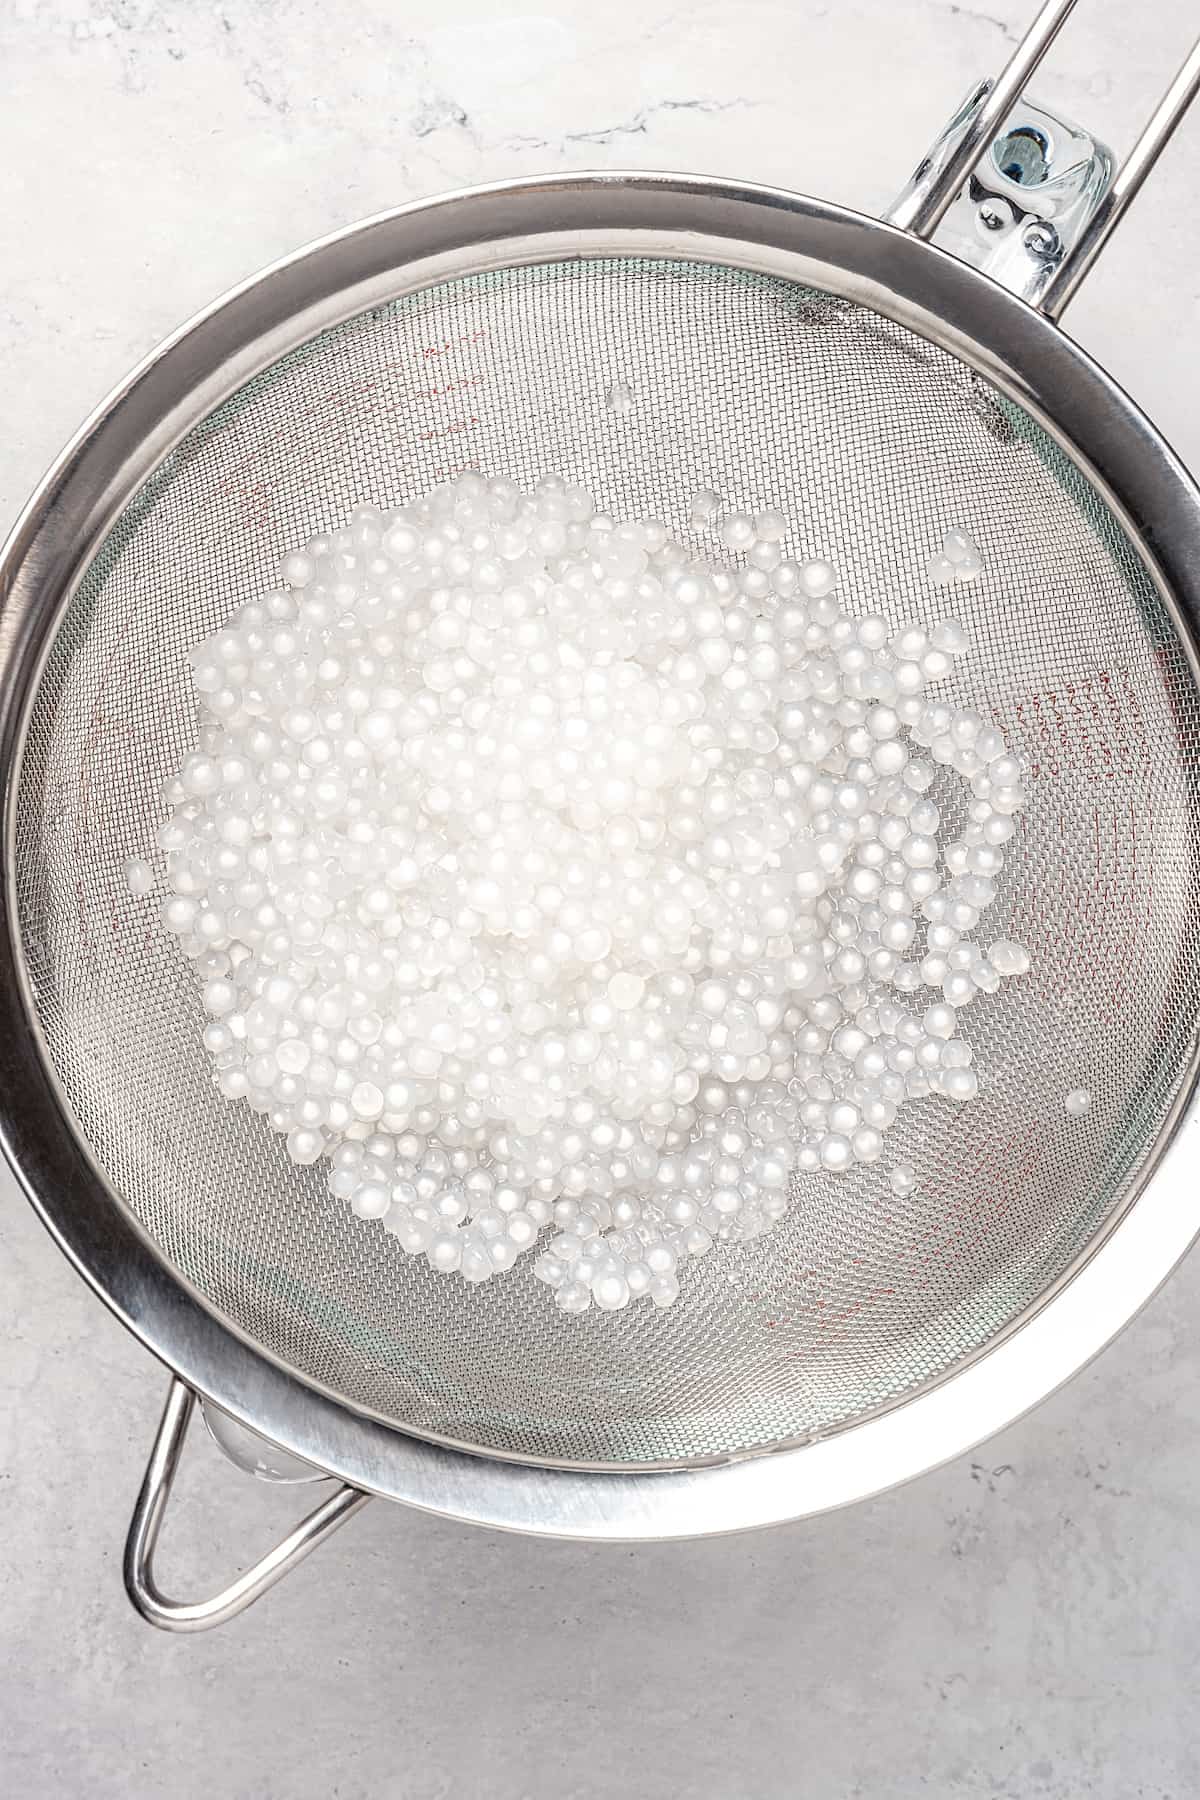 Sago pearls in fine mesh strainer